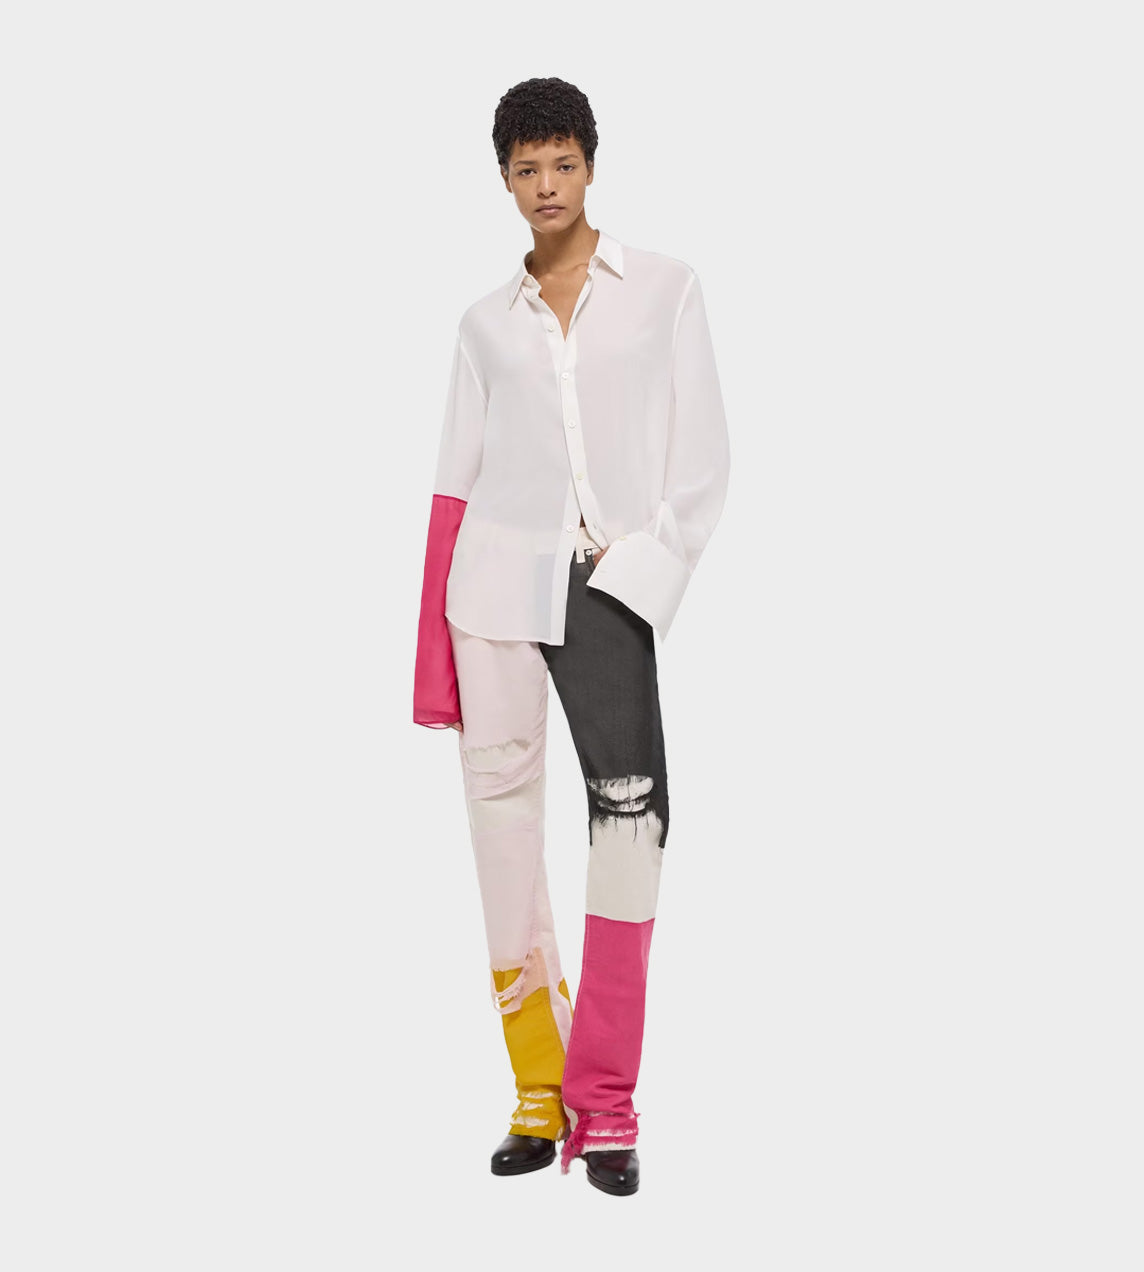 Helmut Lang - Colourblocked Shirt Fuchsia/White